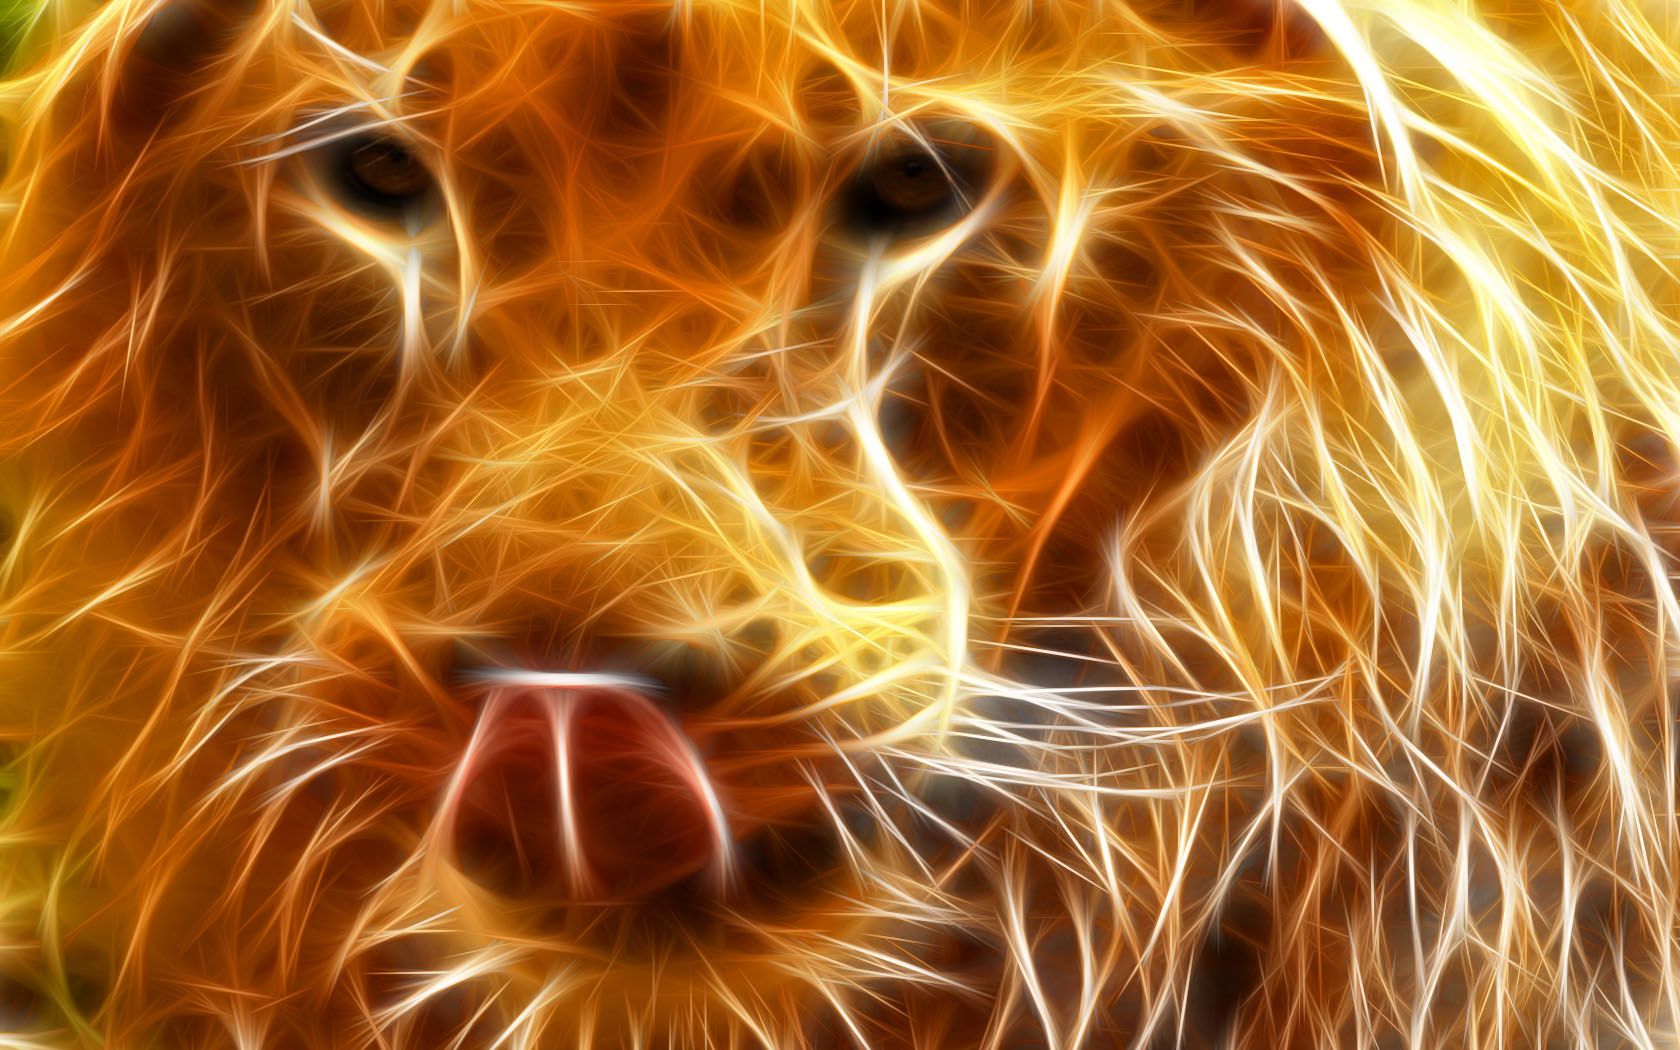 ART. Animal wallpaper, Digital art photography, Lion wallpaper